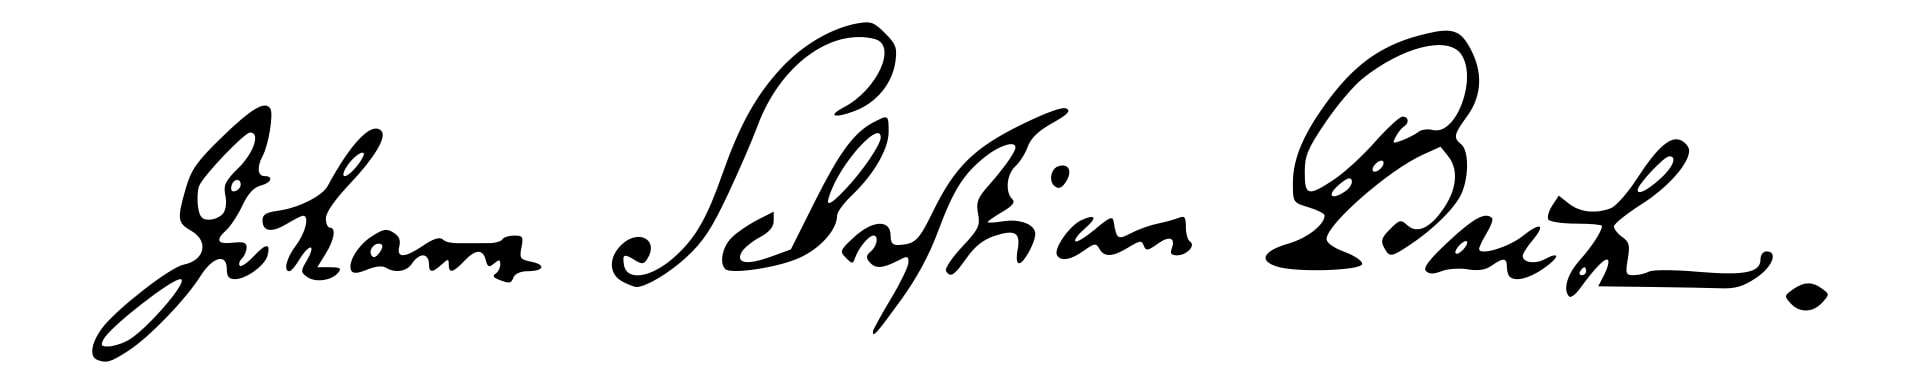 Johann Sebastian Bach Signature